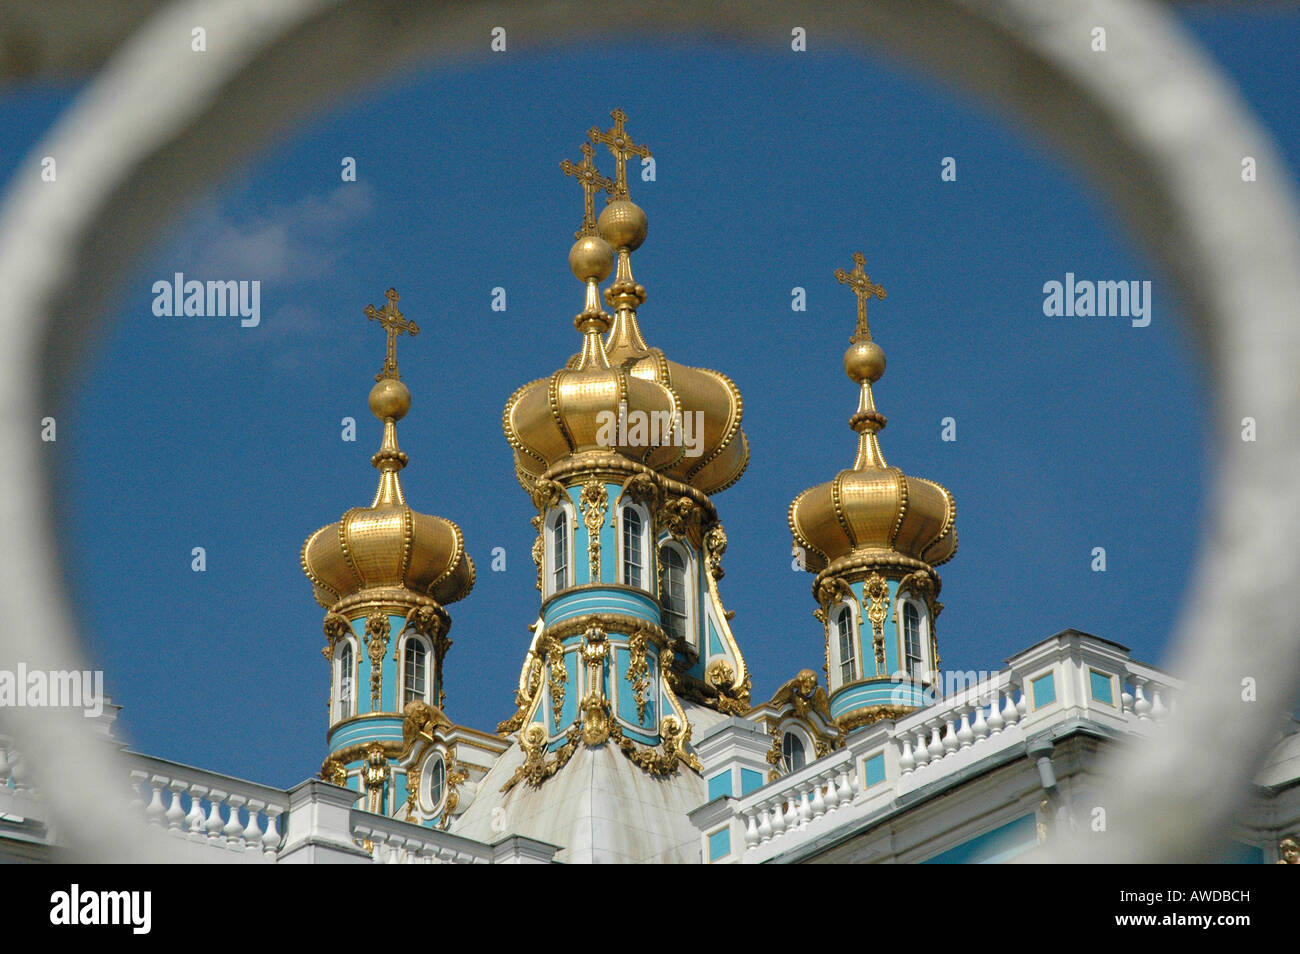 Towers of the palace of Katharina, Pushkin near St. Petersburg, Russia Stock Photo